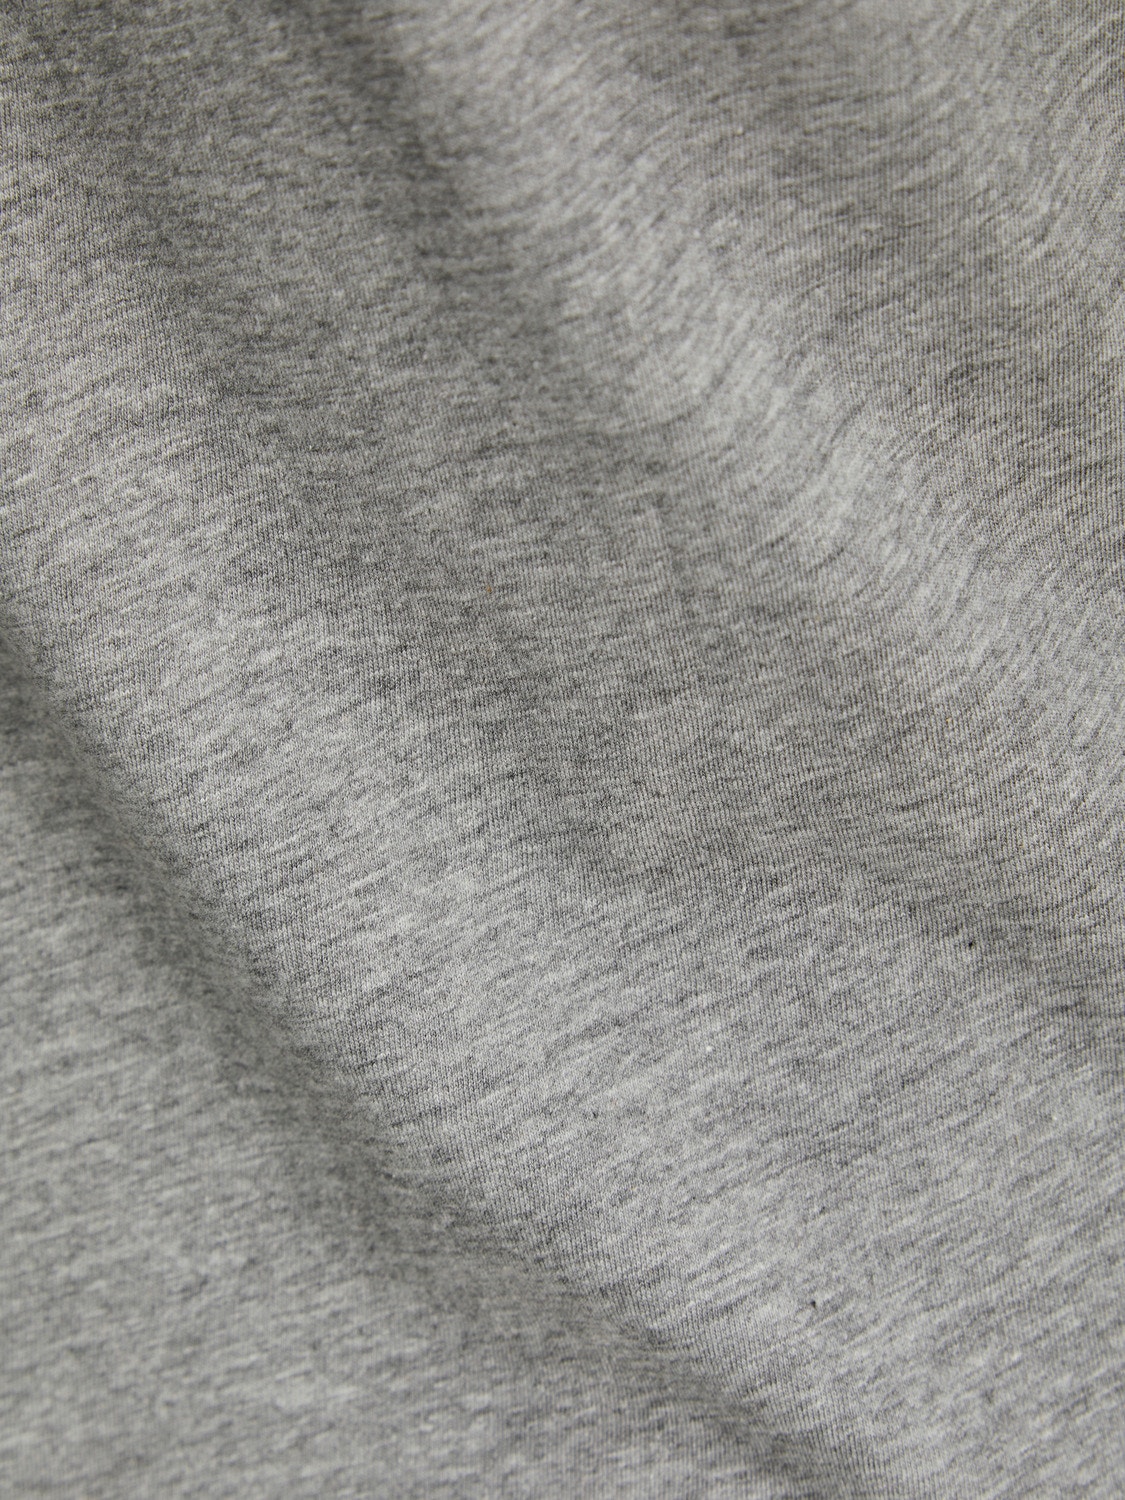 JJXX JXALVIRA Camiseta -Light Grey Melange - 12200189